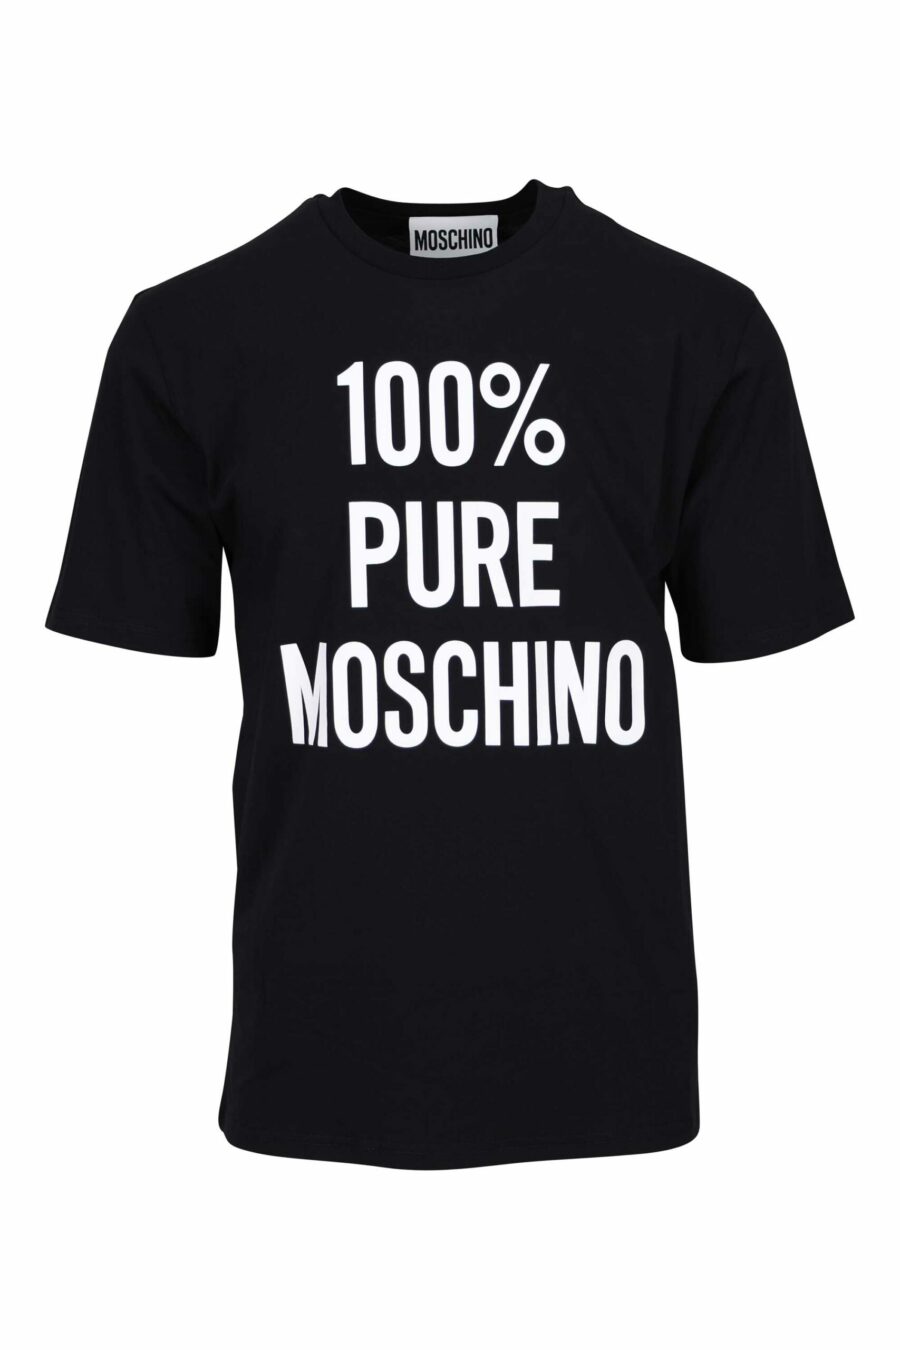 Black organic cotton T-shirt "100% pure moschino" - 667113765150 scaled